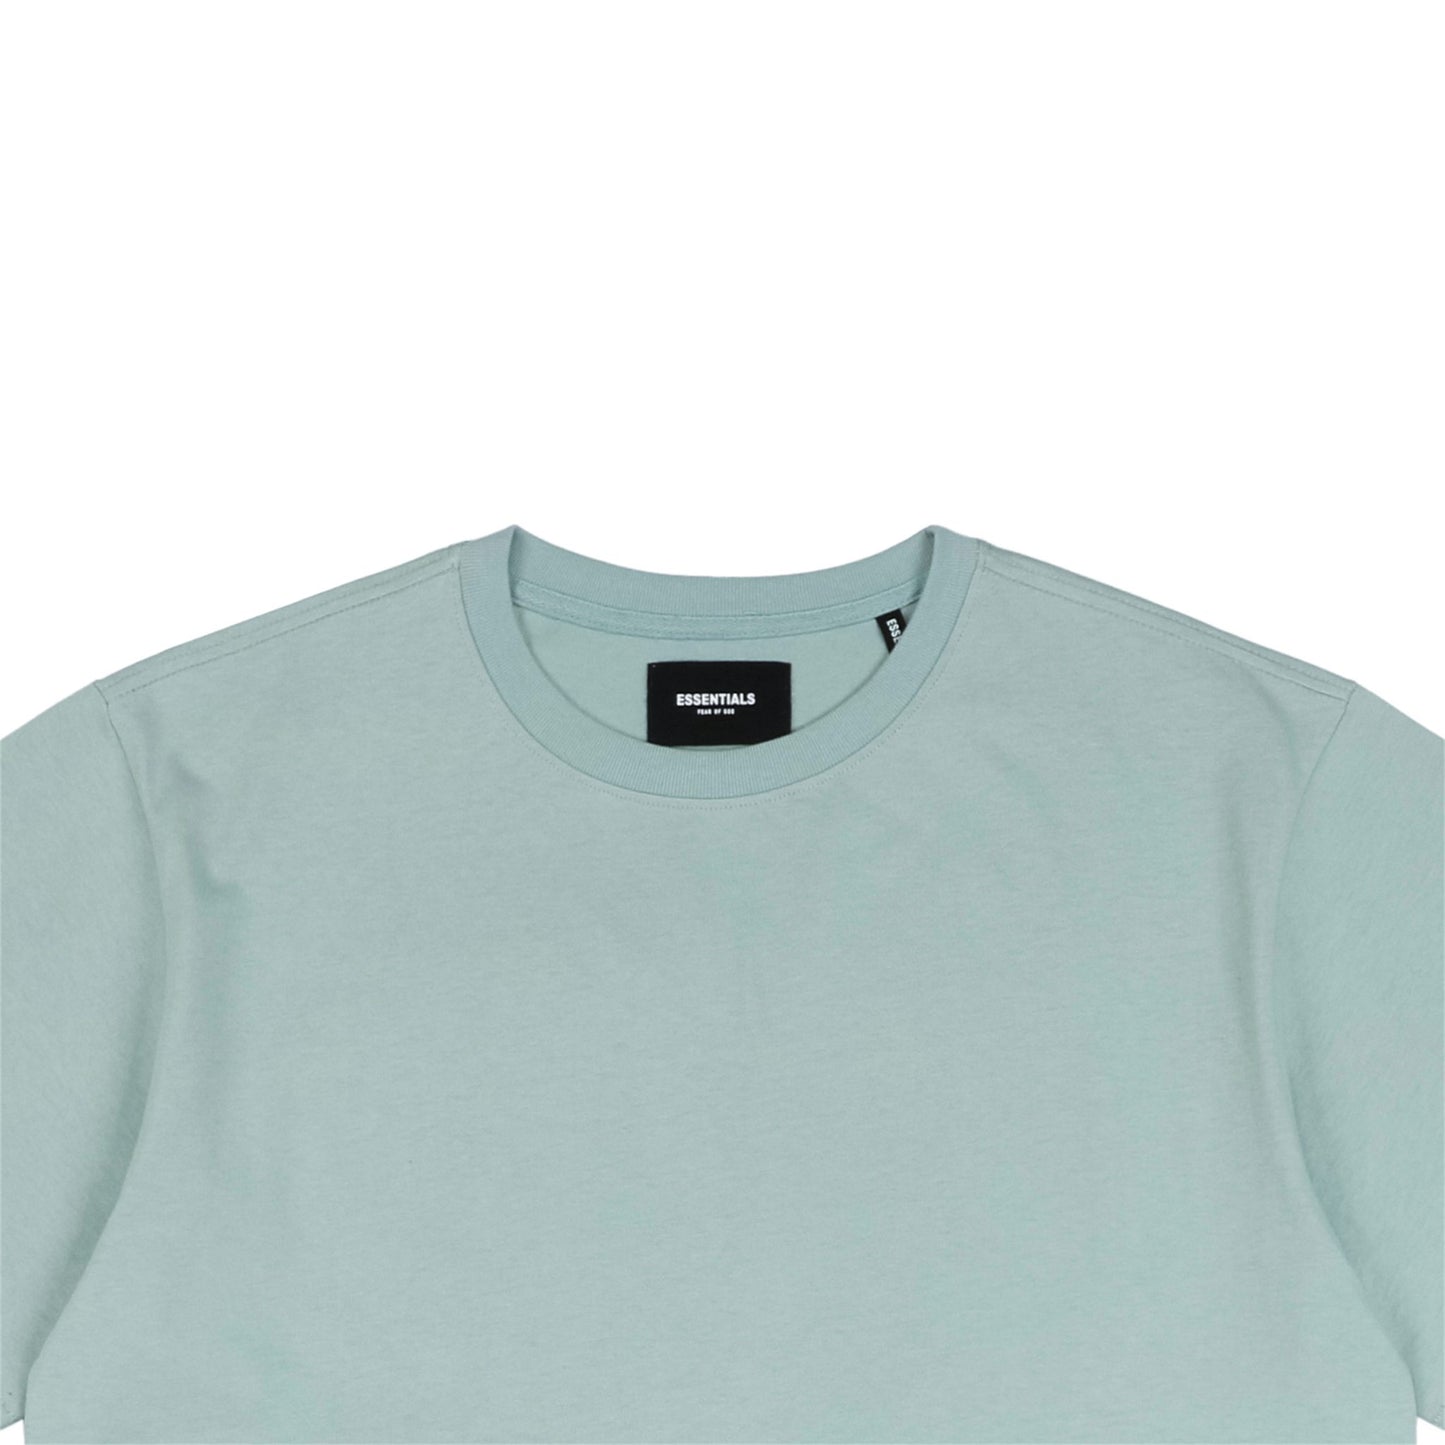 FOG Turquoise E55ential5 T-Shirt